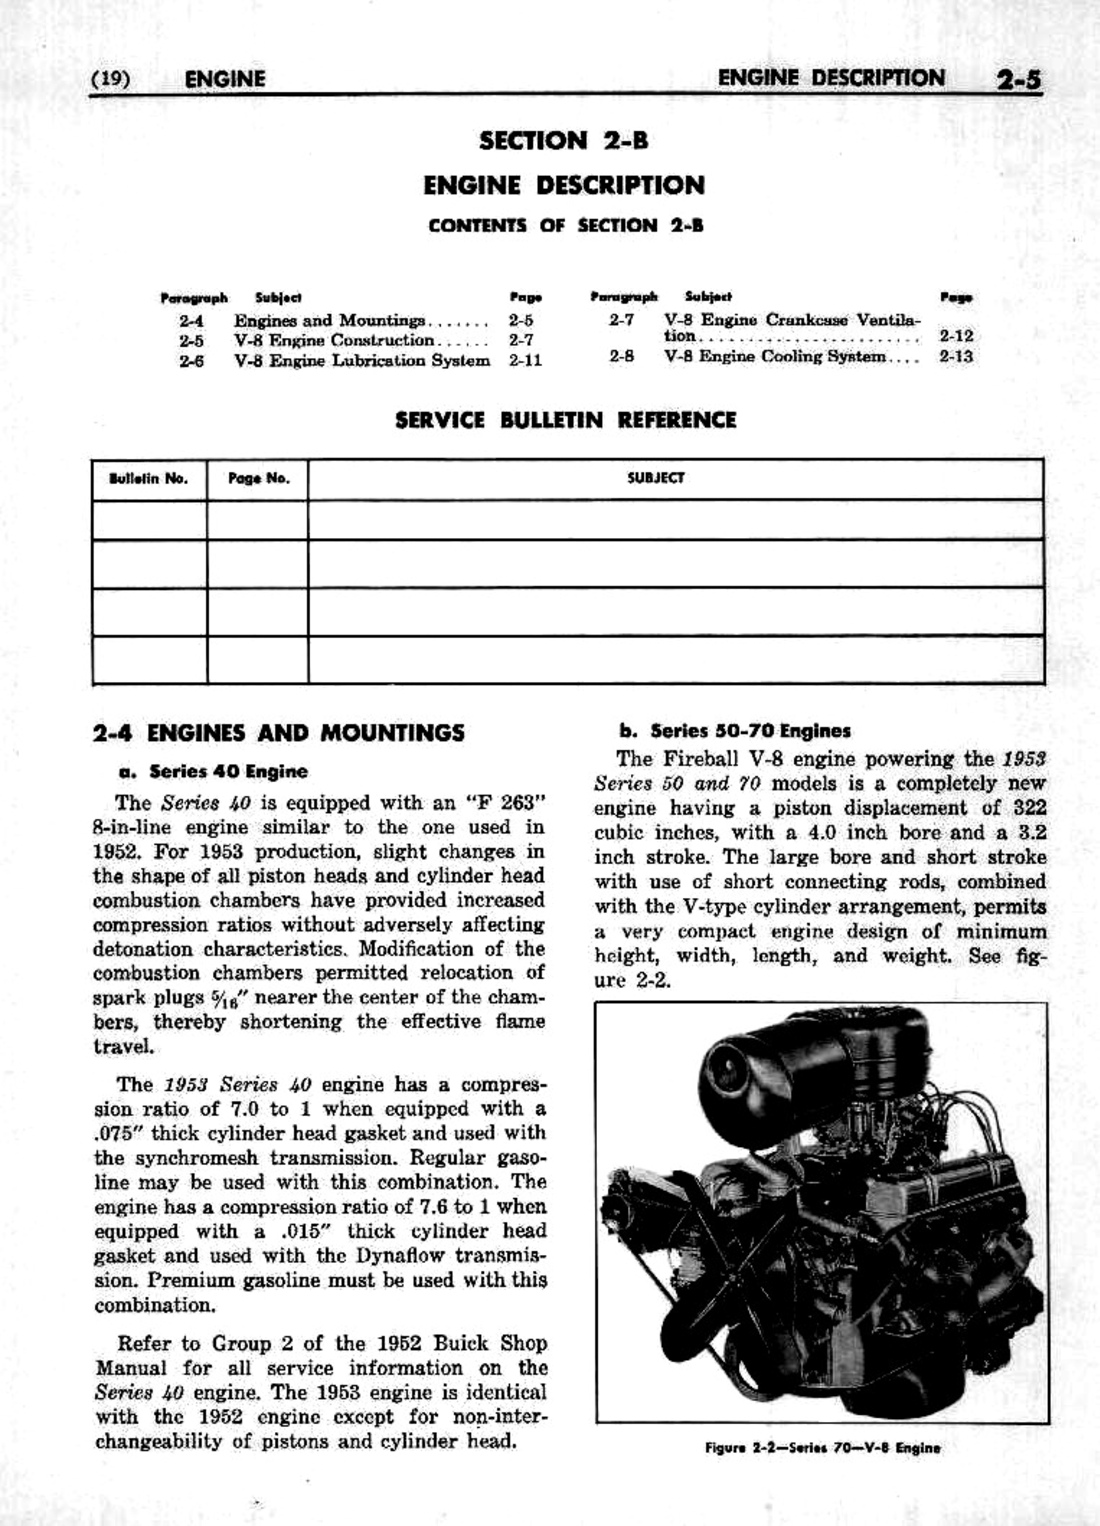 n_03 1953 Buick Shop Manual - Engine-005-005.jpg